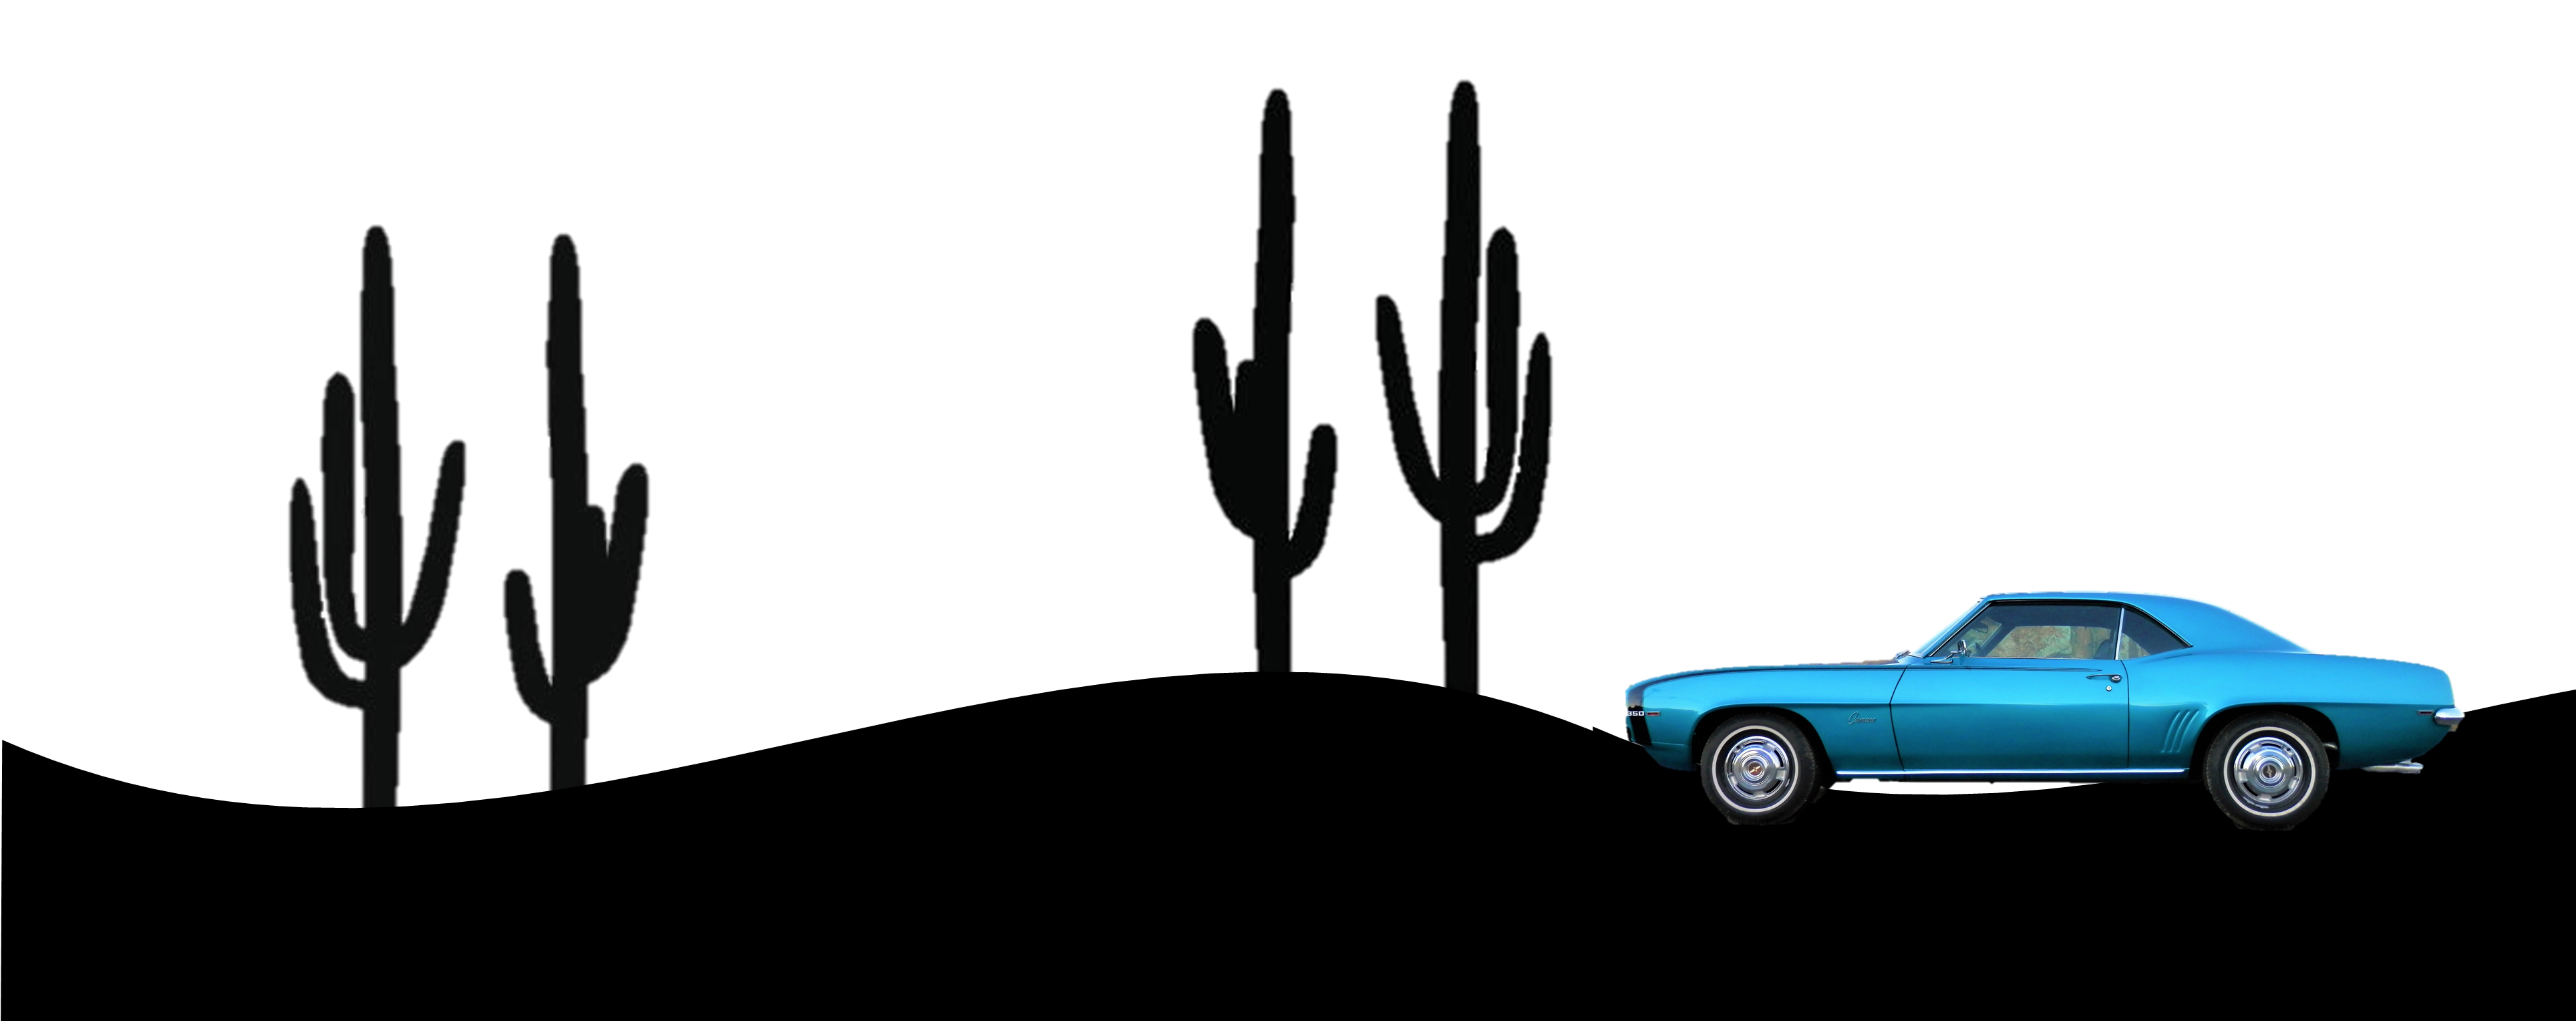 blue car image